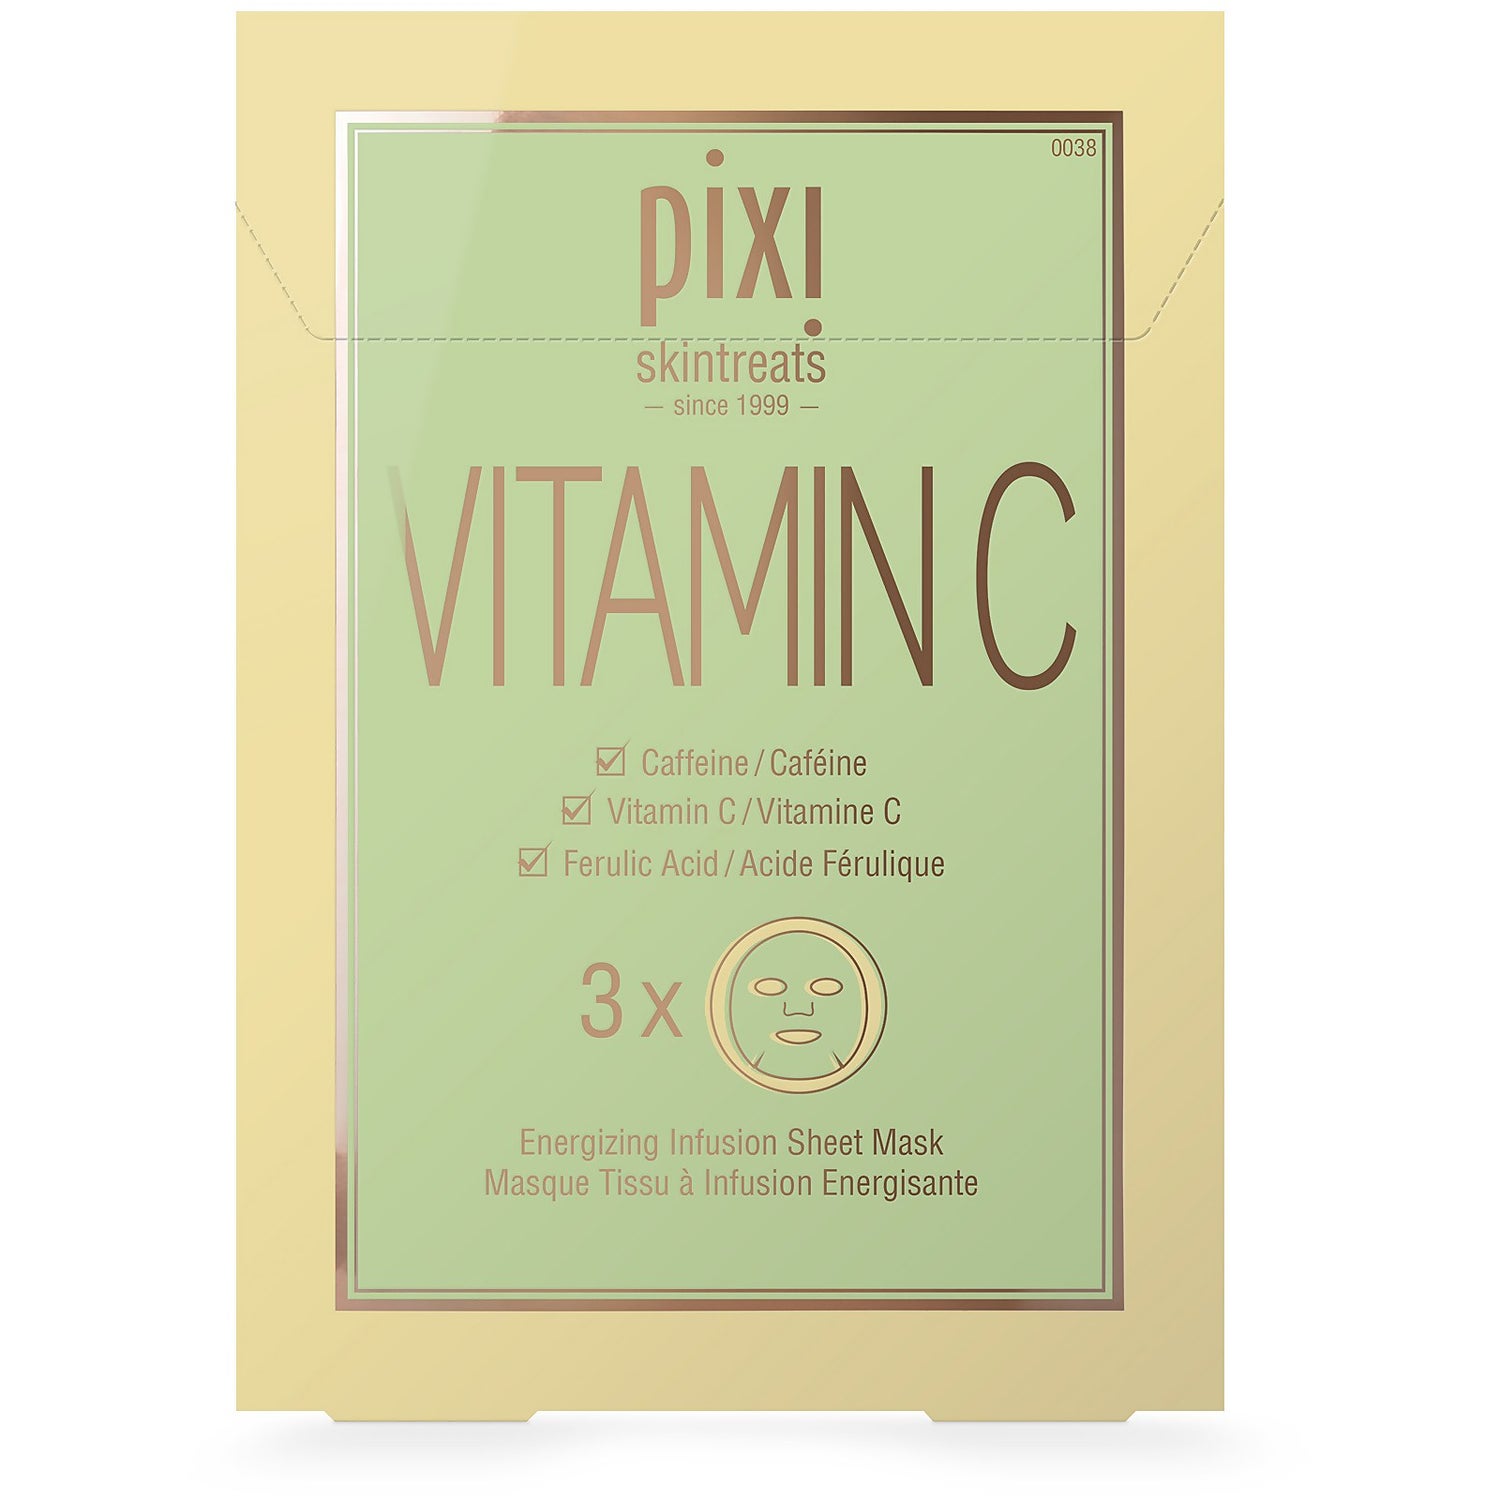 PIXI Vitamin-C Sheet Mask (Pack of 3)